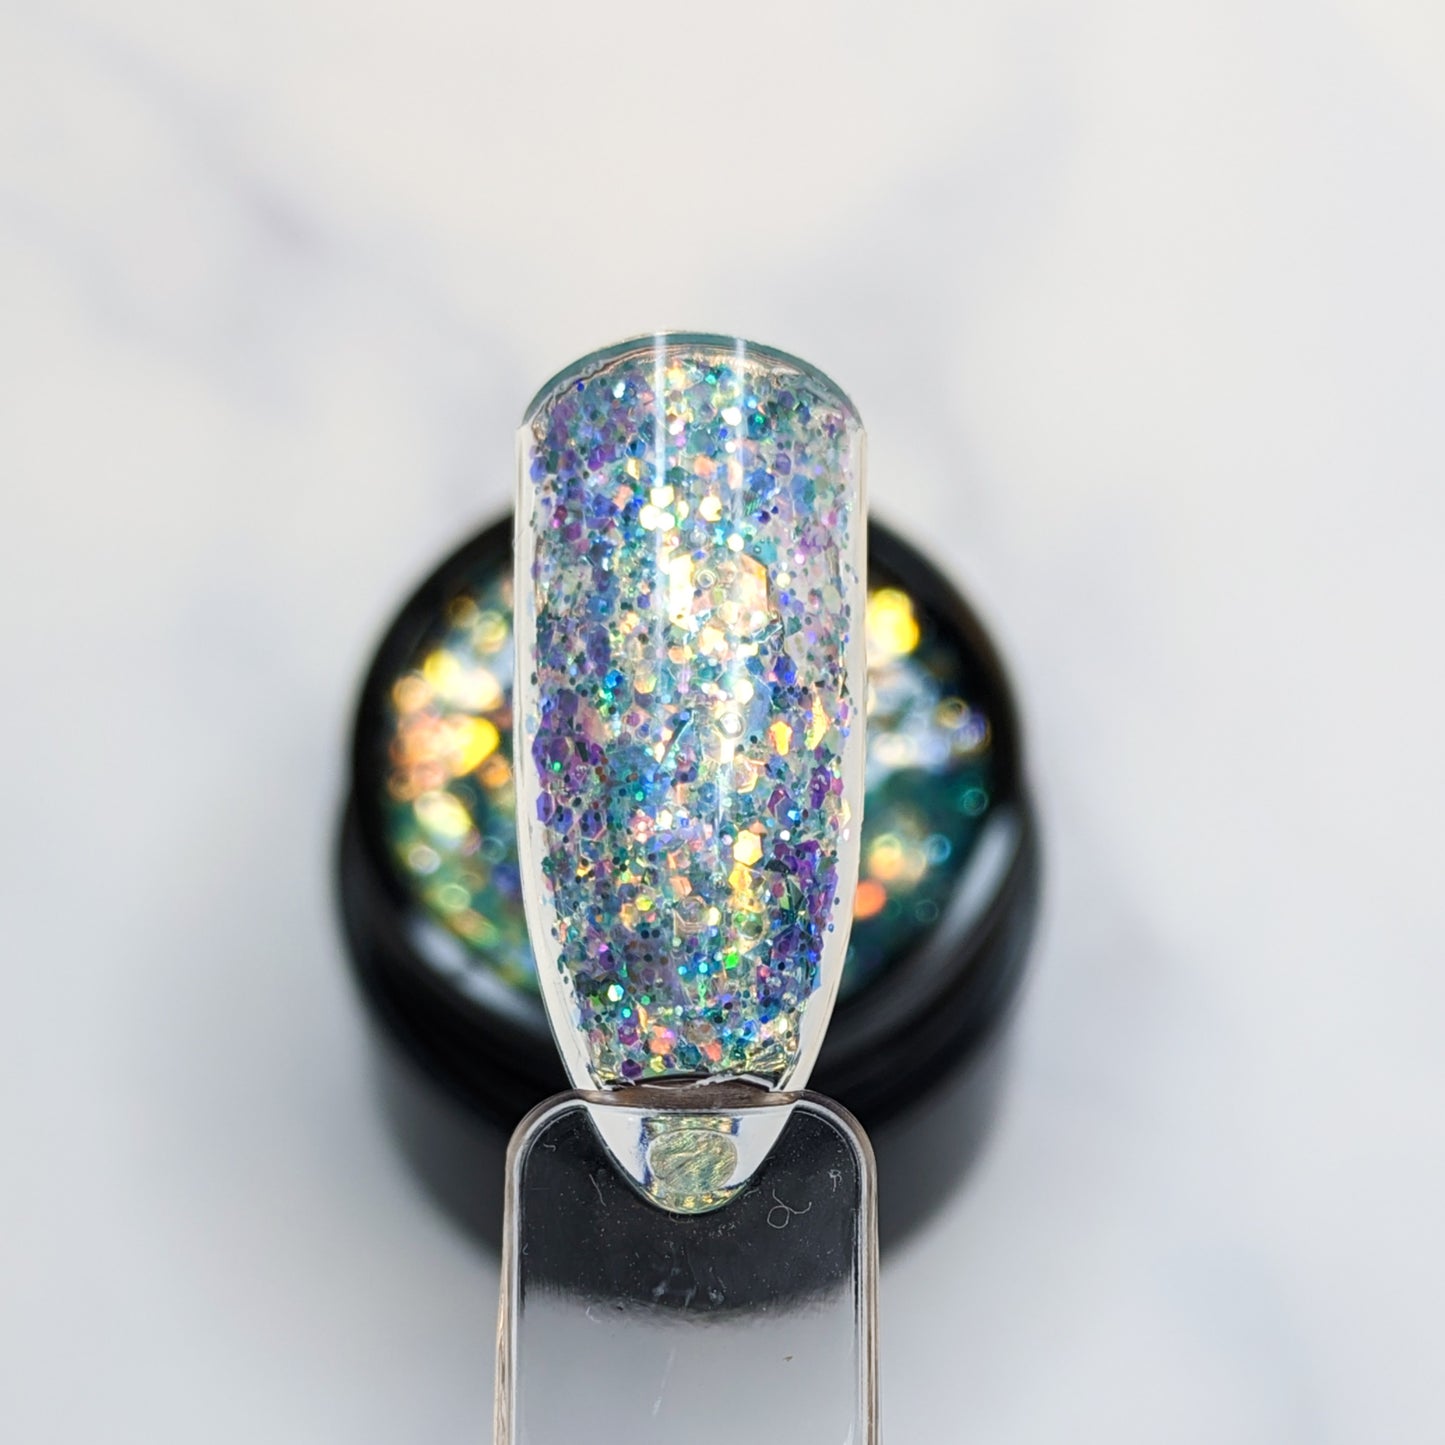 Holidaze Glitterlustnails UV LED blue metallic holo iridescent glitter gel nail polish swatch